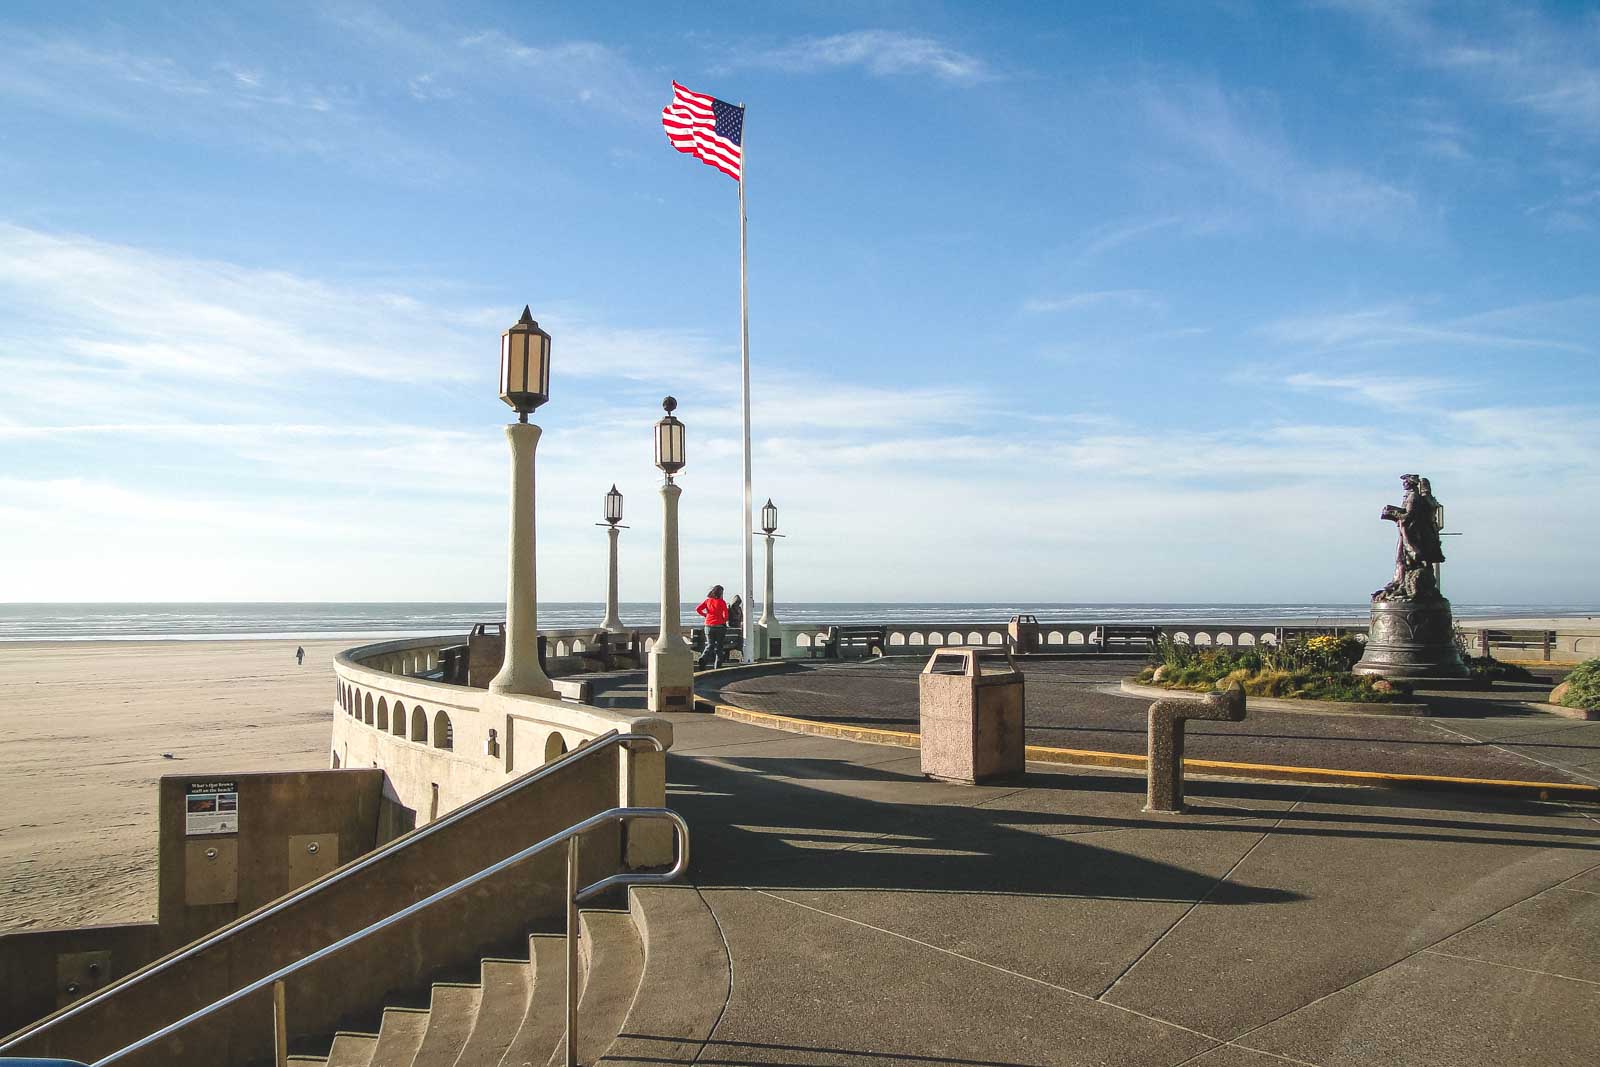 American flag and lamp posts on beach promenade in Seaside, Oregon.